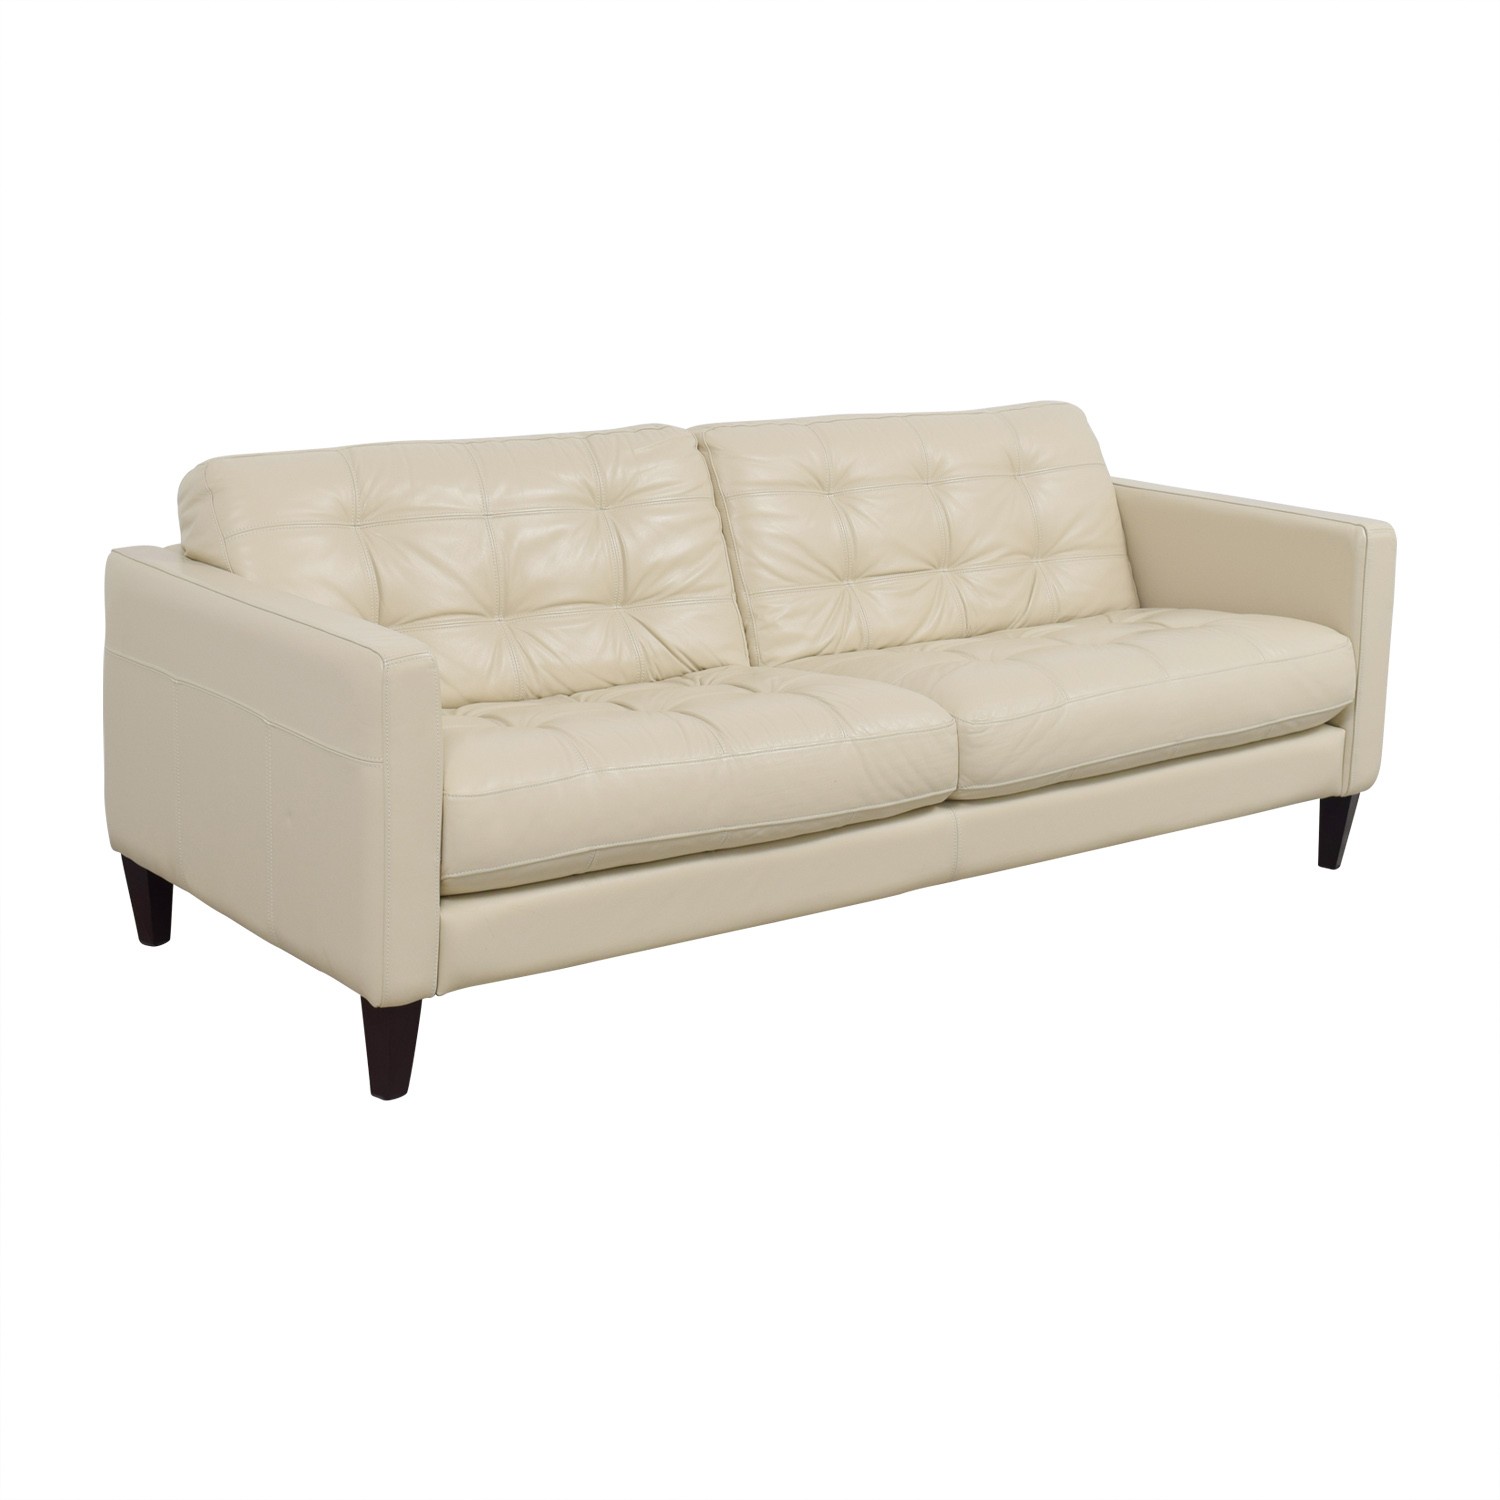 48 off macys macys white leather tufted sofa sofas